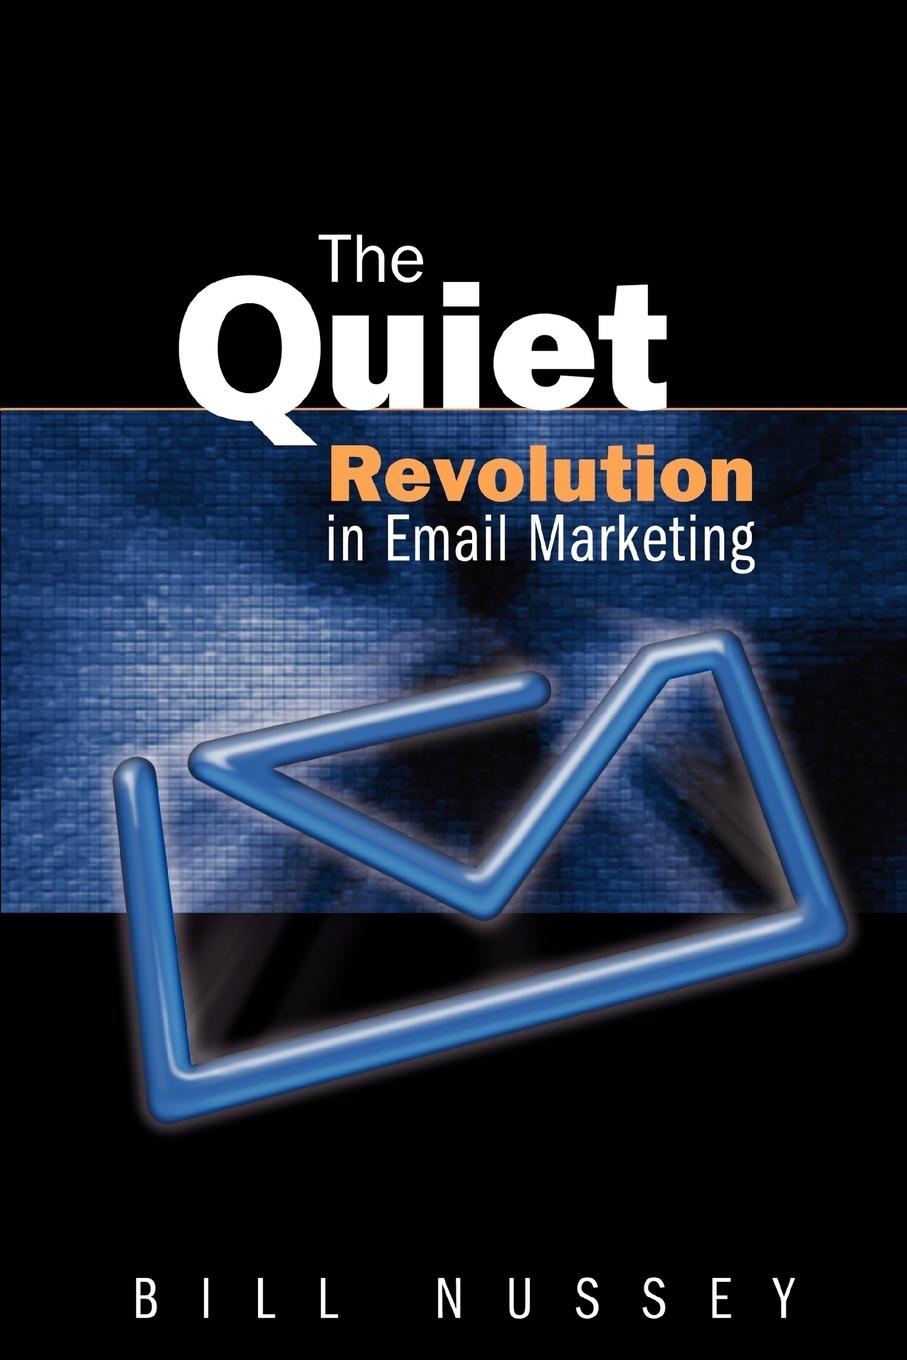 The Quiet Revolution in Email Marketing - Nussey, Bill